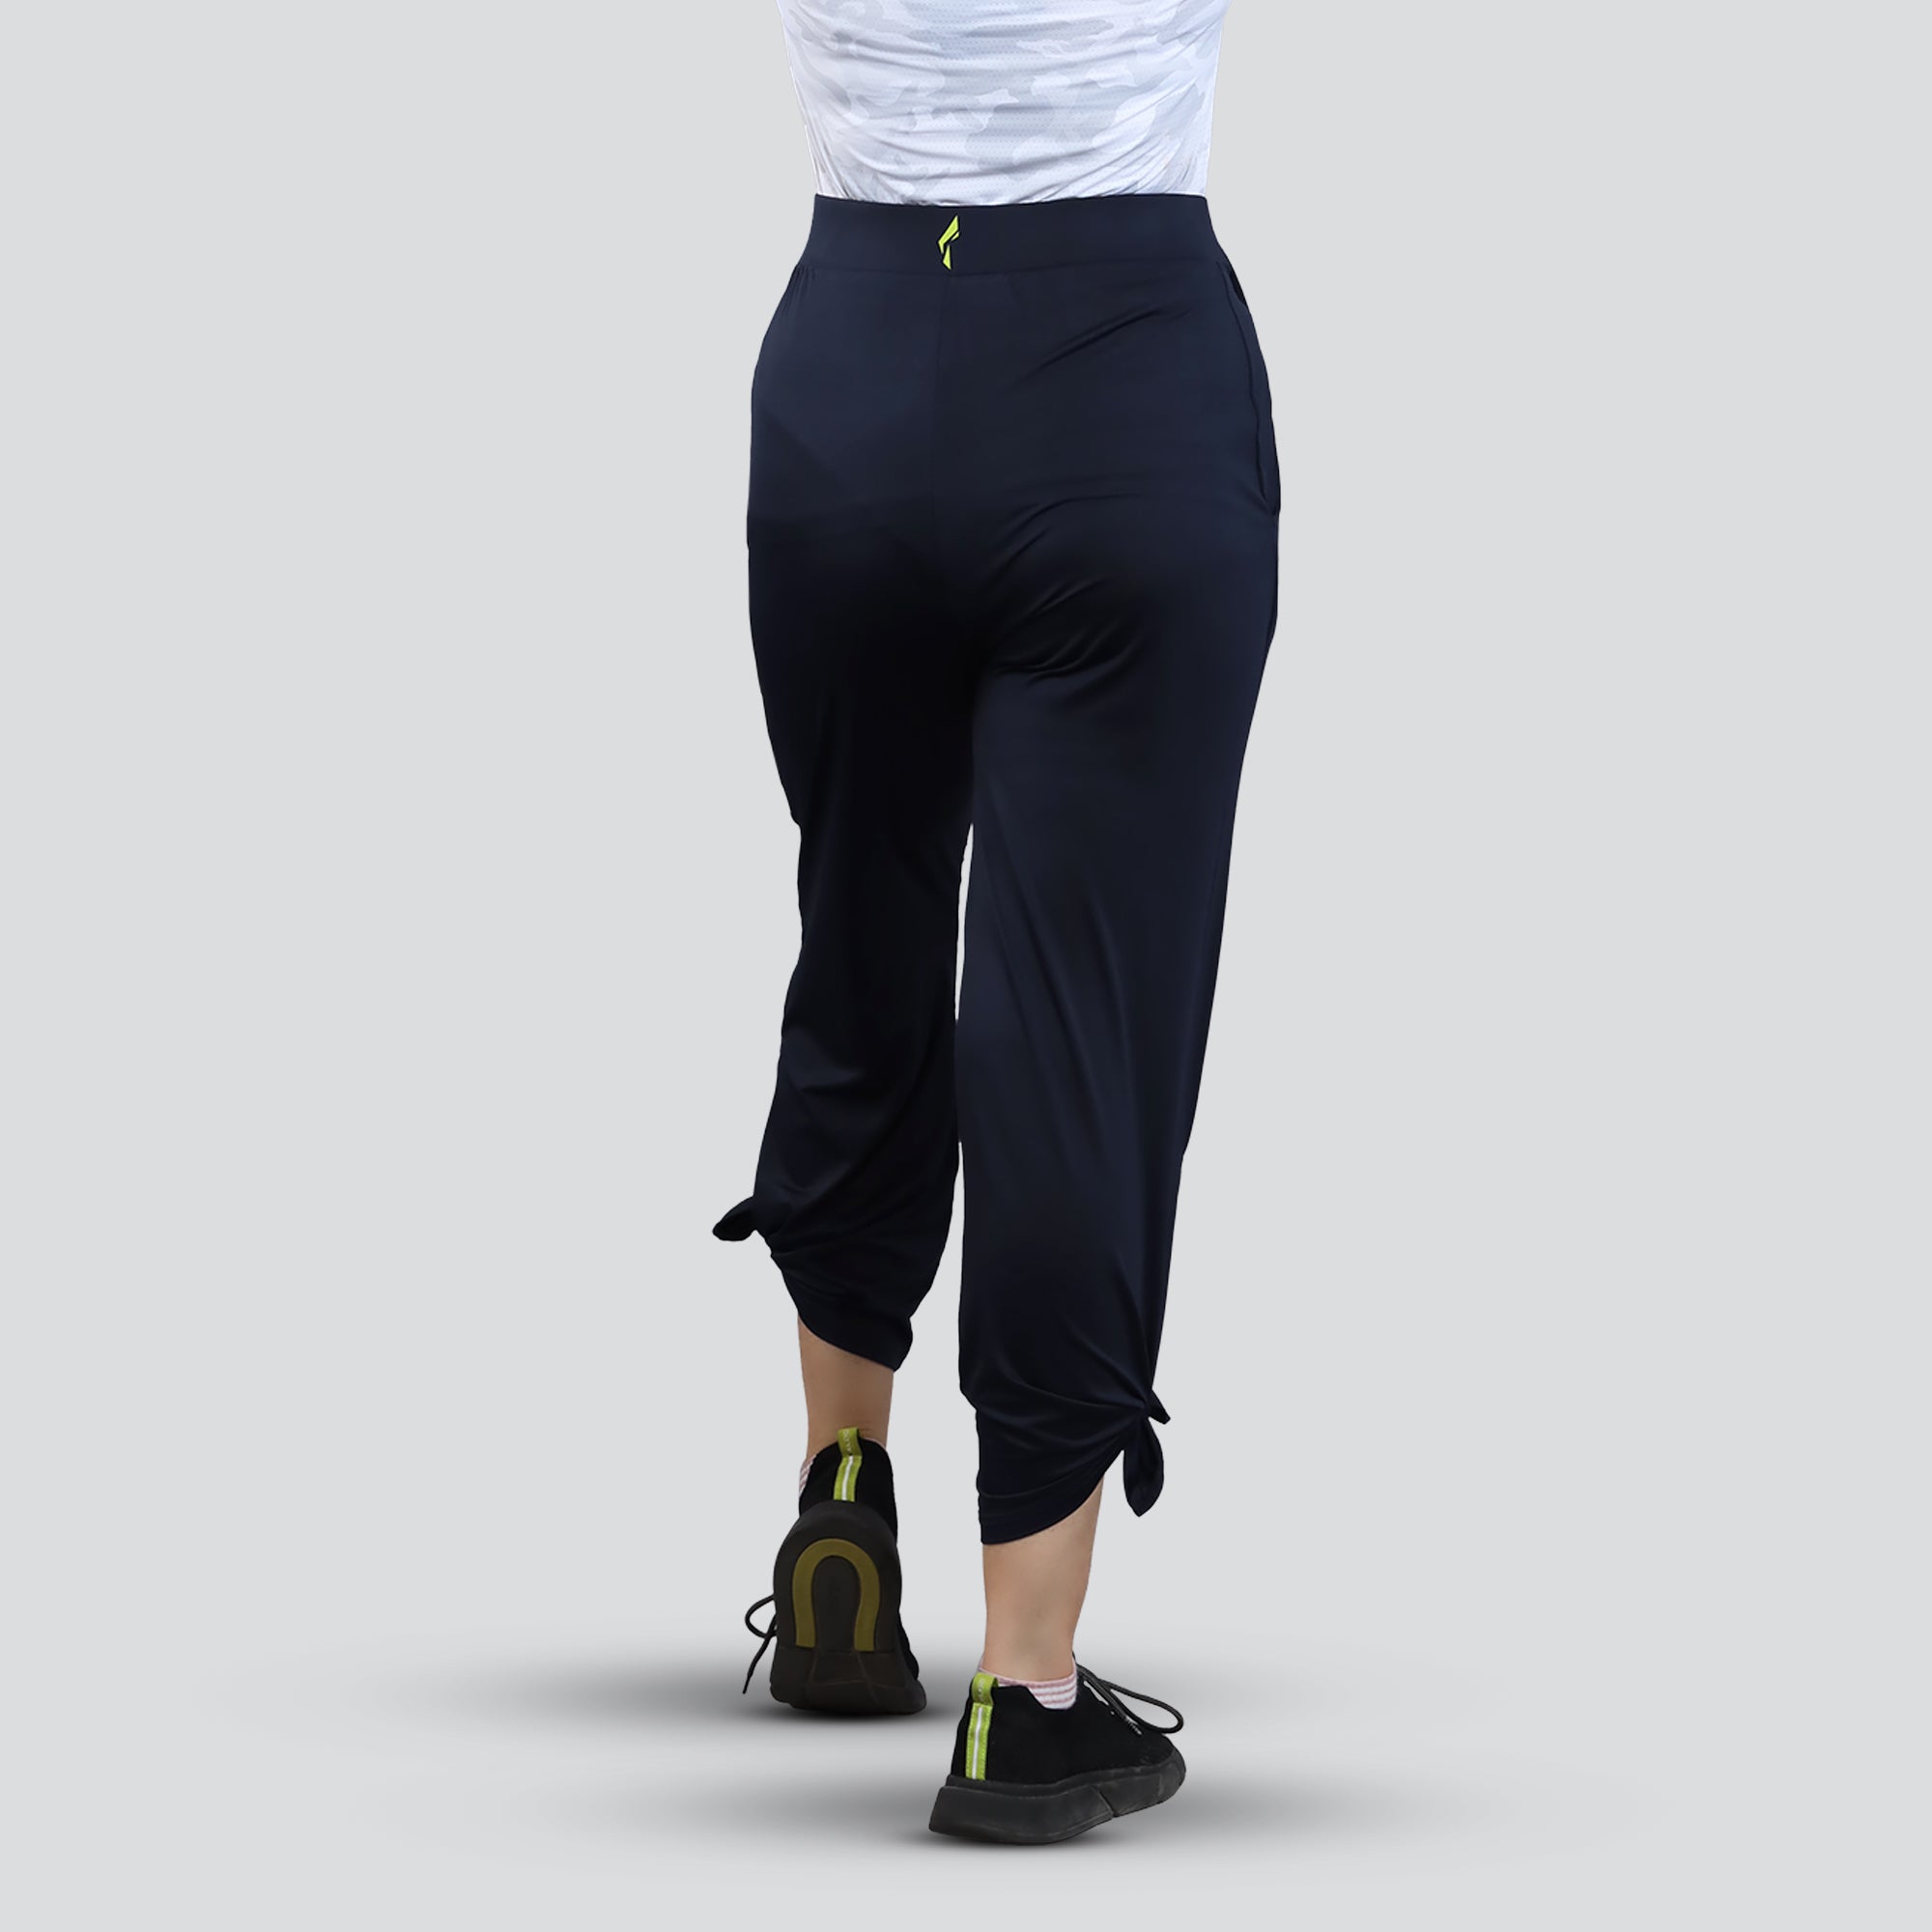 Women's wide leg yoga pant, plazzo palate flared trouser